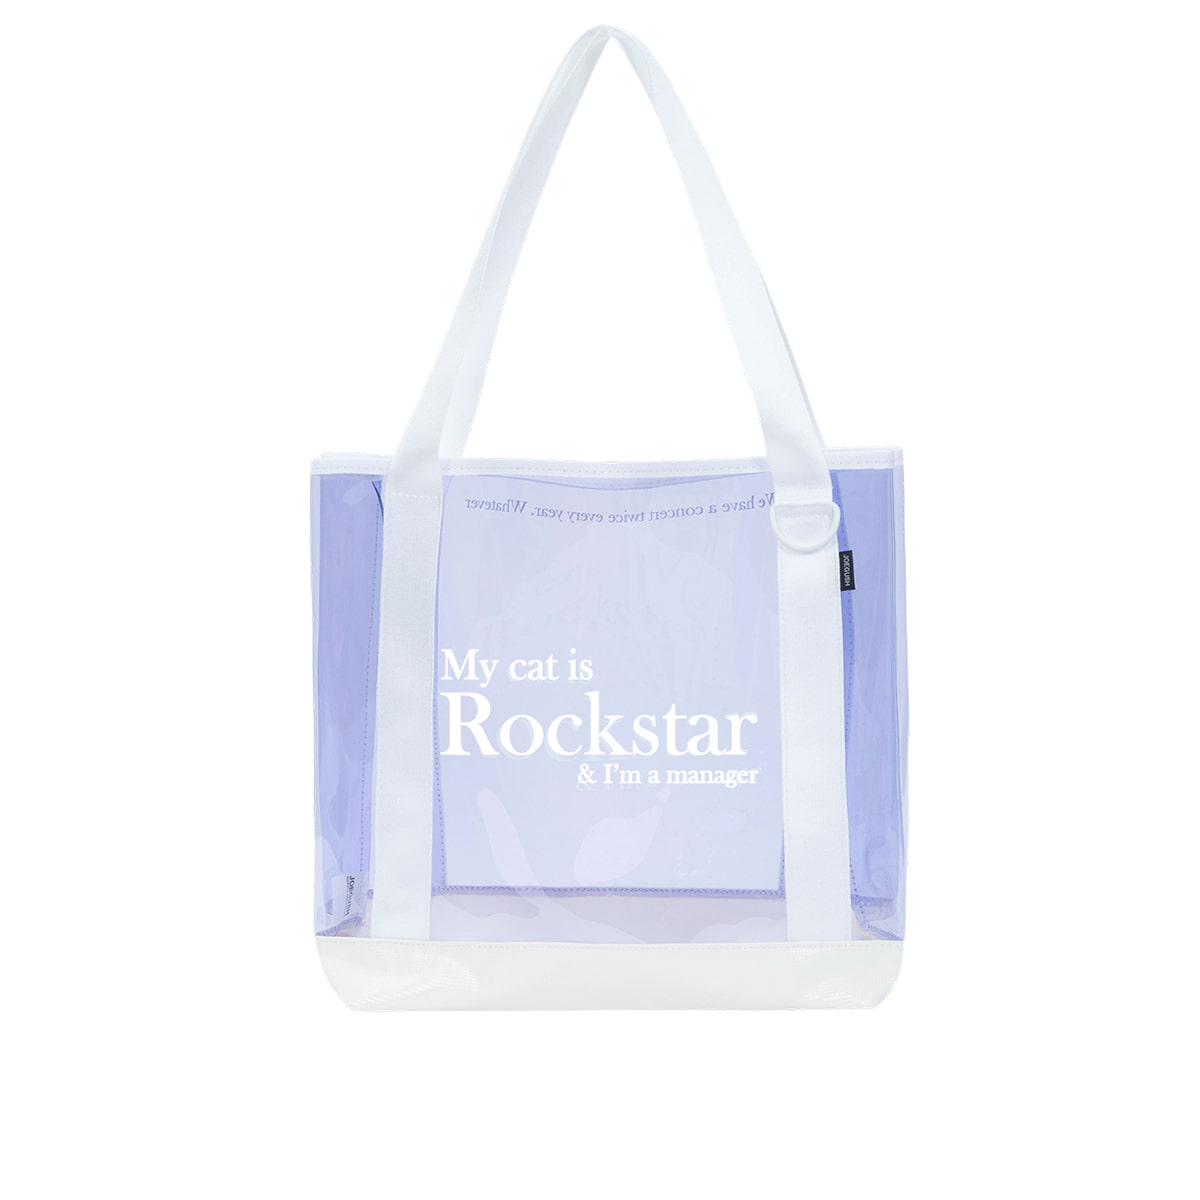 Rockstar pvc tote bag (White/Violet) [Online Exclusive]